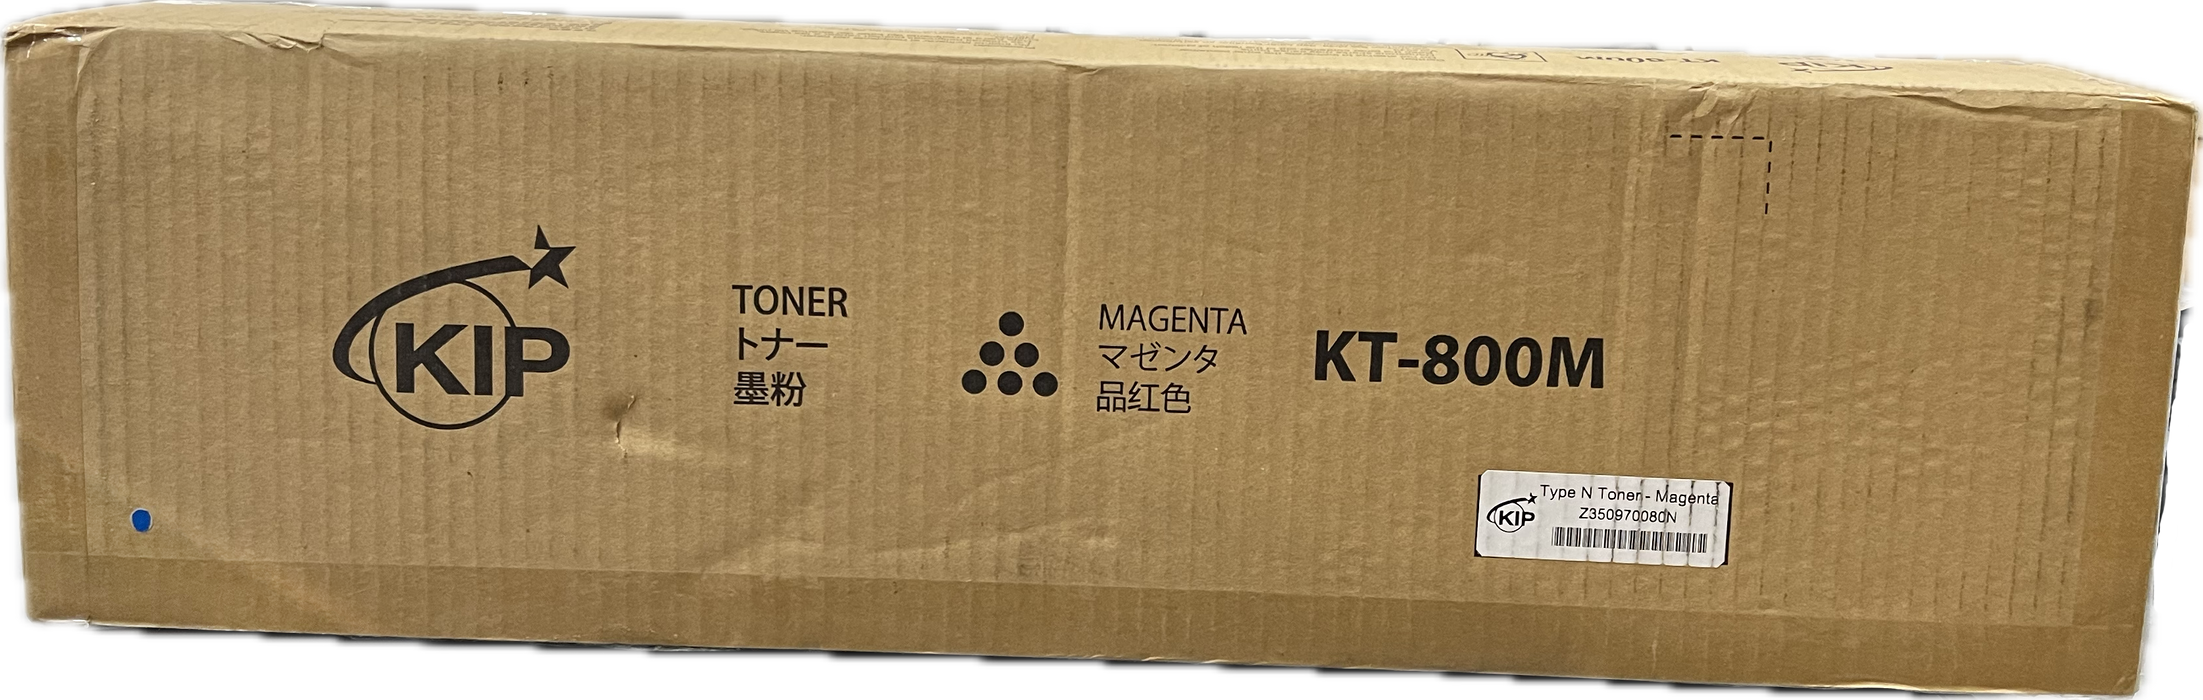 GENUINE KIP MAGENTA TONER | KT-800M